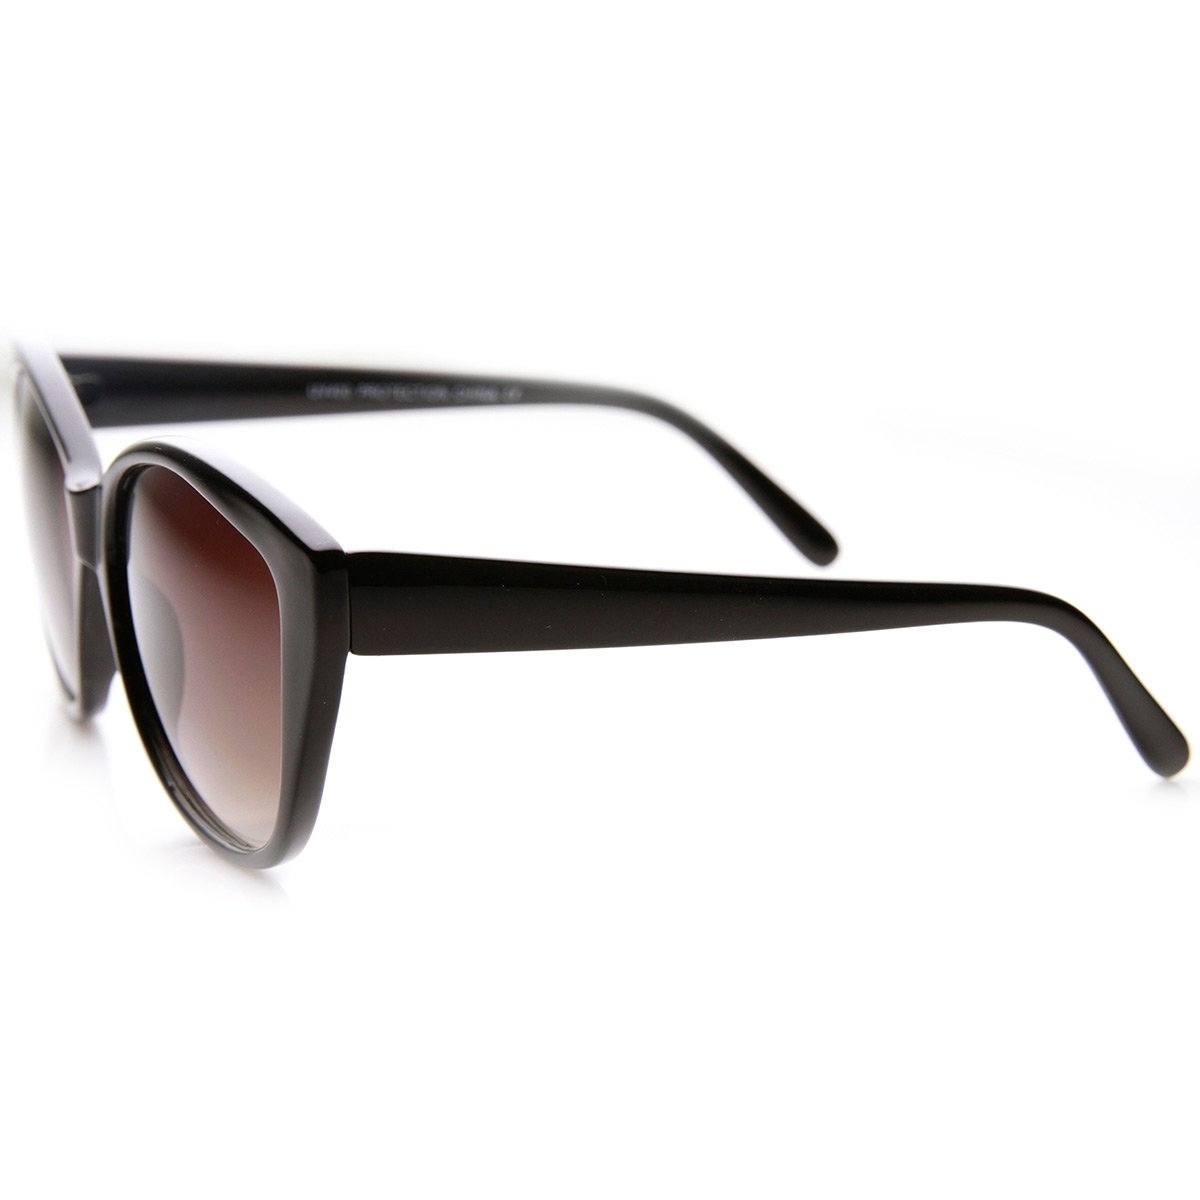 Womens Oversized Oval Mod Glam High Fashion Sunglasses - Black Lavender